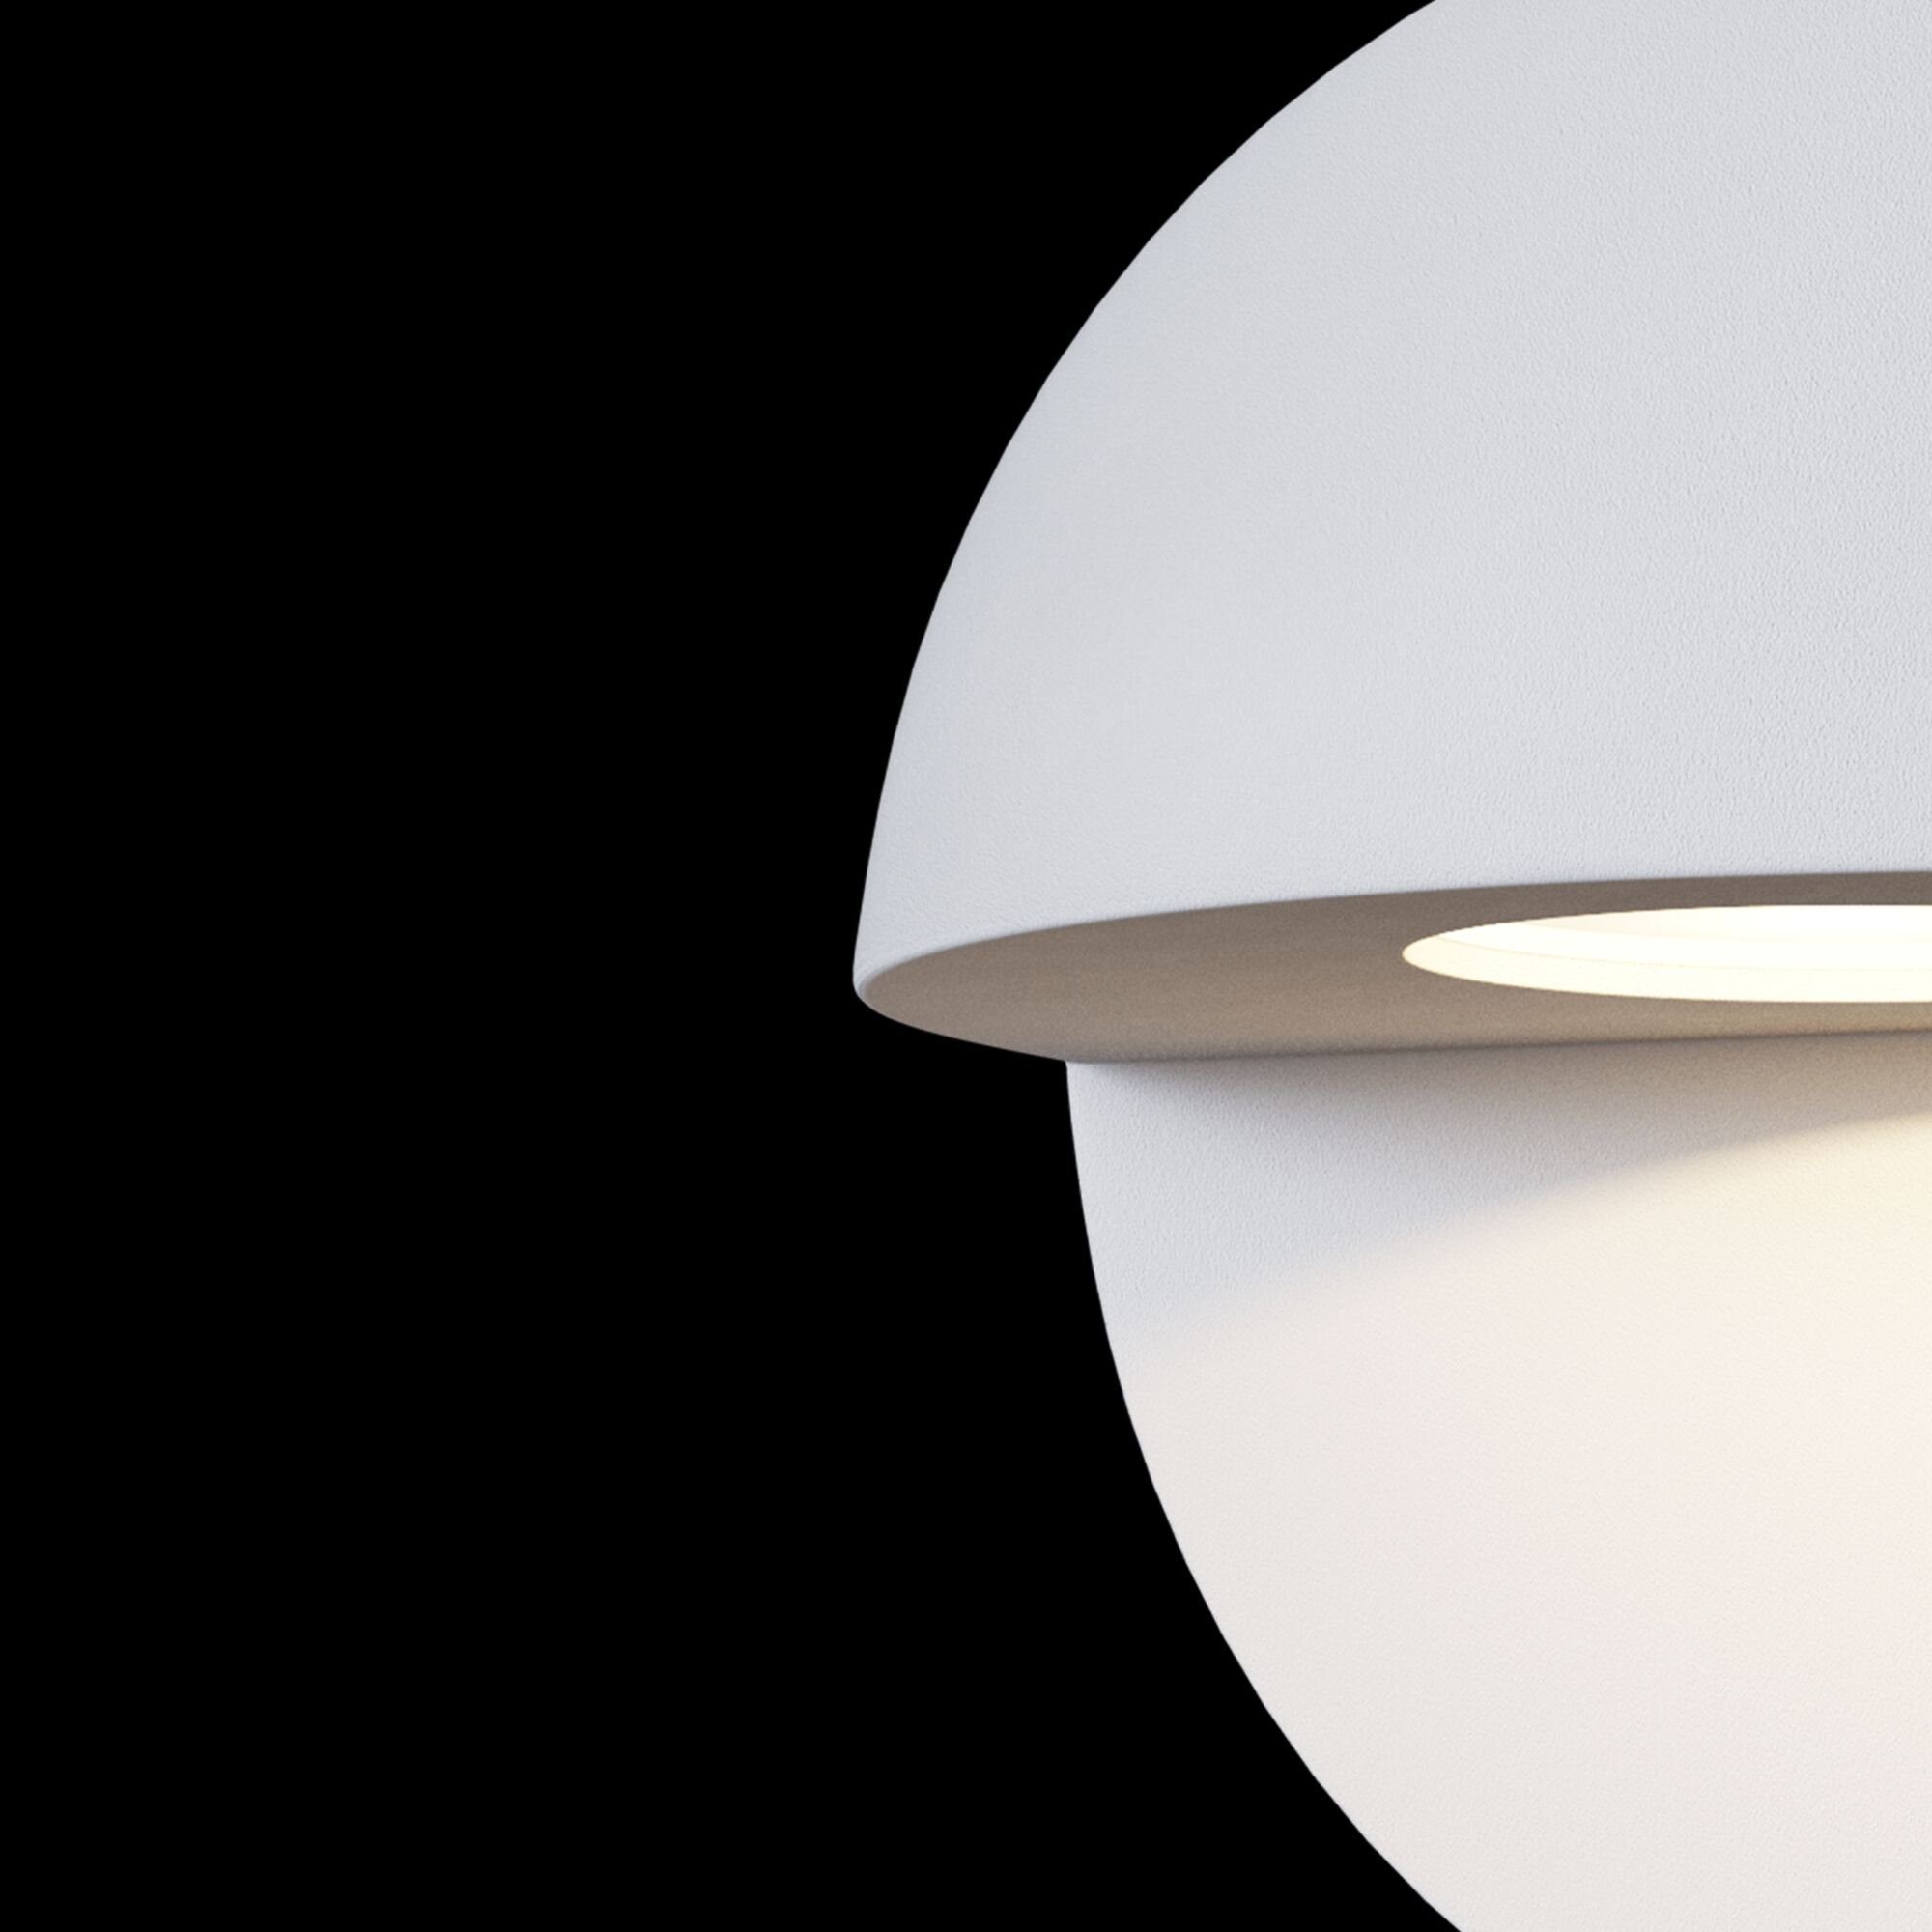 MAYTONI DECORATIVE cm, Lampe 6x6x5.5 dekoratives 2 fest & hochwertige Raumobjekt Wandleuchte LED Design integriert, LIGHTING Mezzo